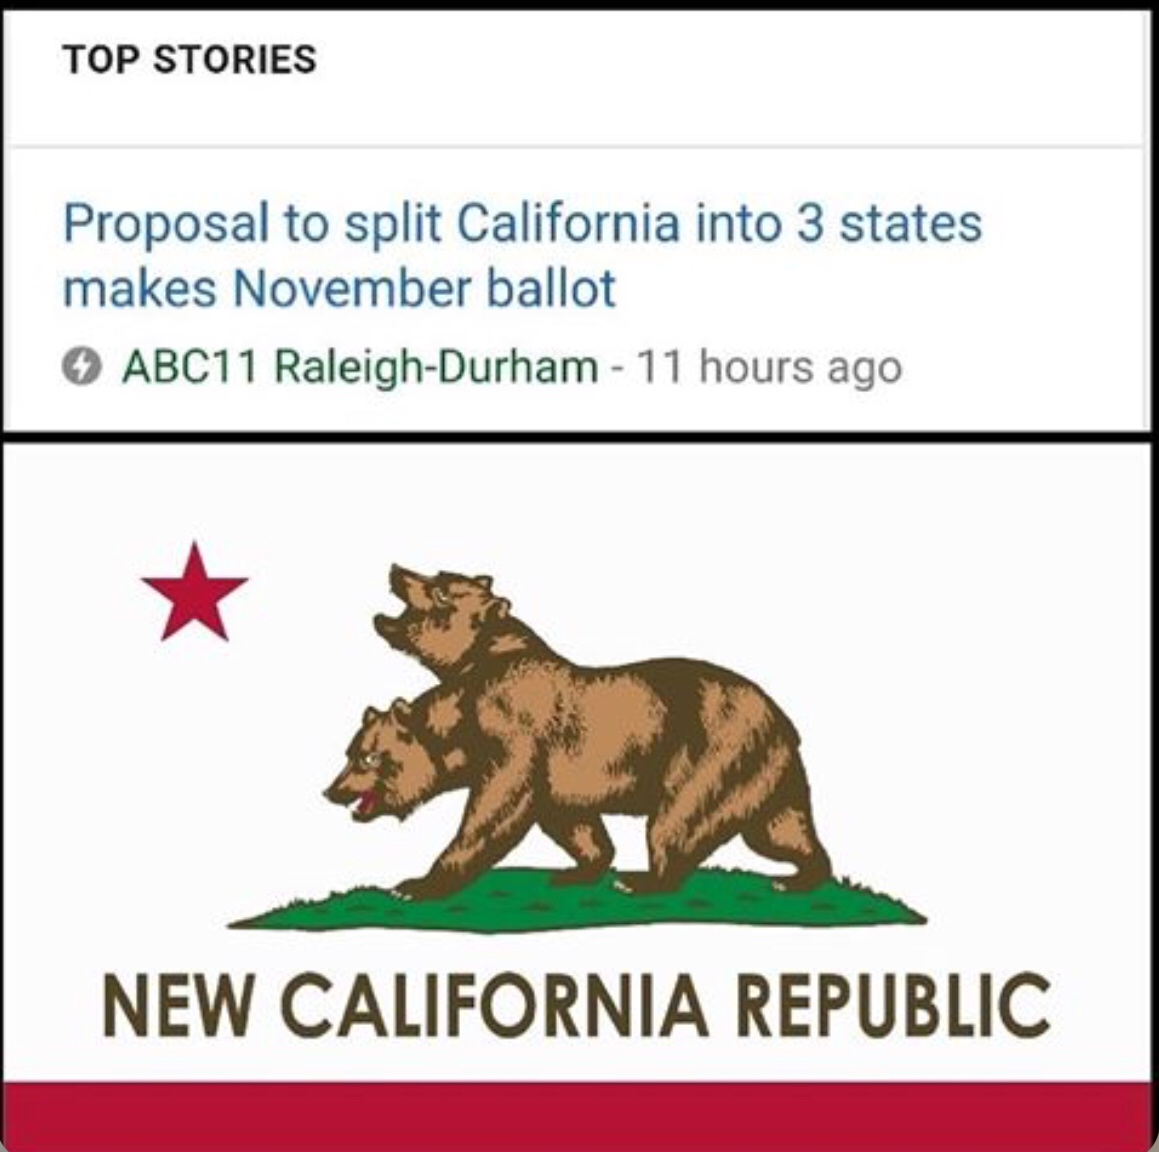 new california republic flag - Top Stories Proposal to split California into 3 states makes November ballot ABC11 RaleighDurham 11 hours ago New California Republic